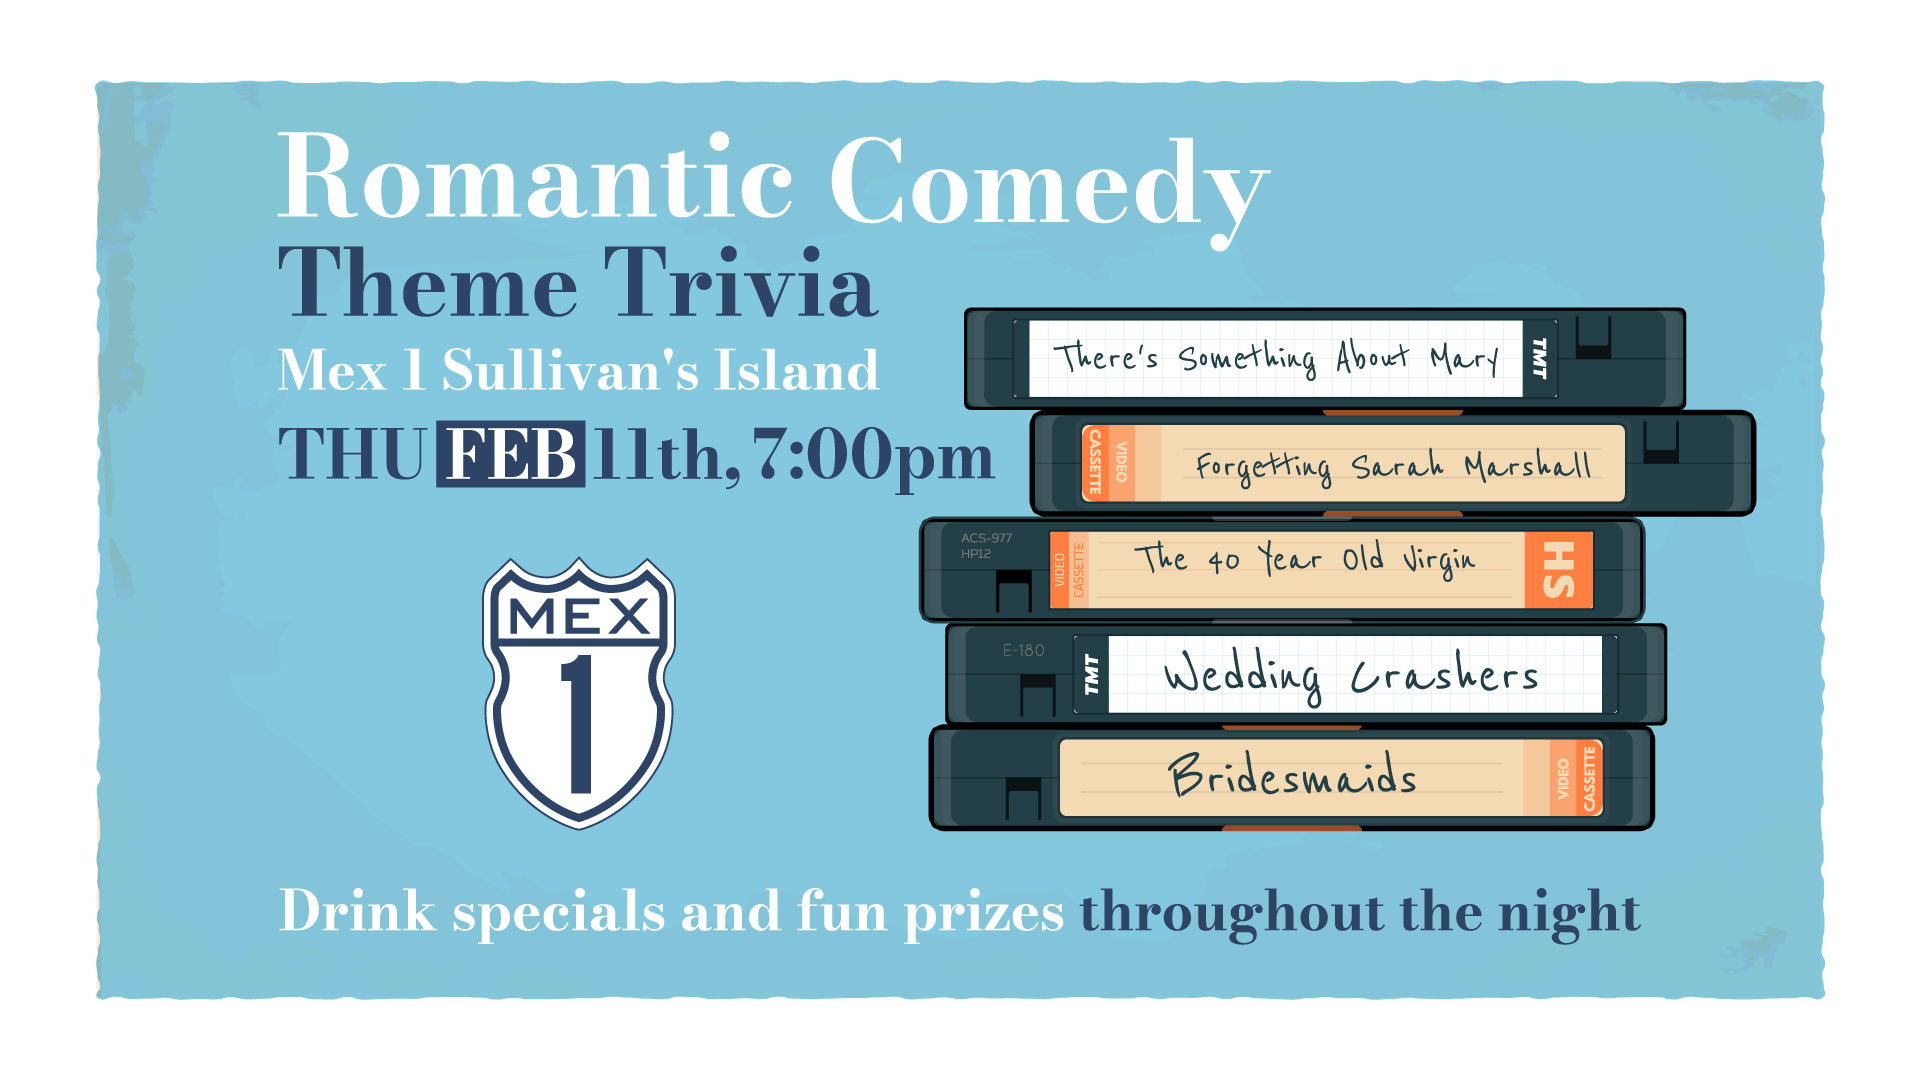 Romantic Comedy Theme Trivia at Mex 1 Sullivan's Island on Thursday, February 11th at 7pm